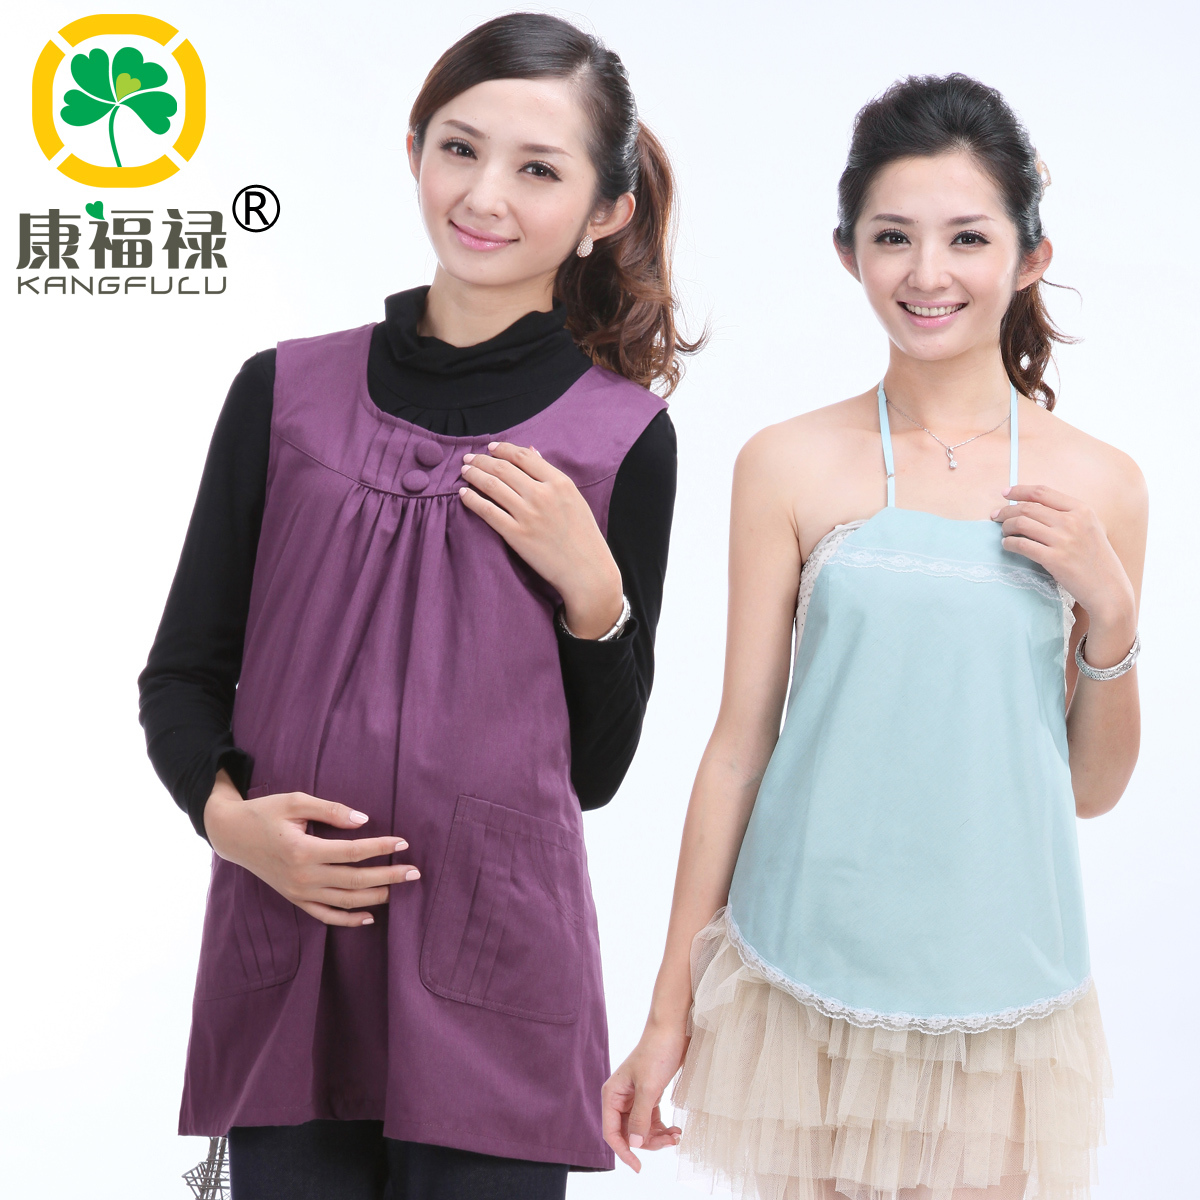 Radiation-resistant maternity clothing maternity radiation-resistant clothes kfl512 101